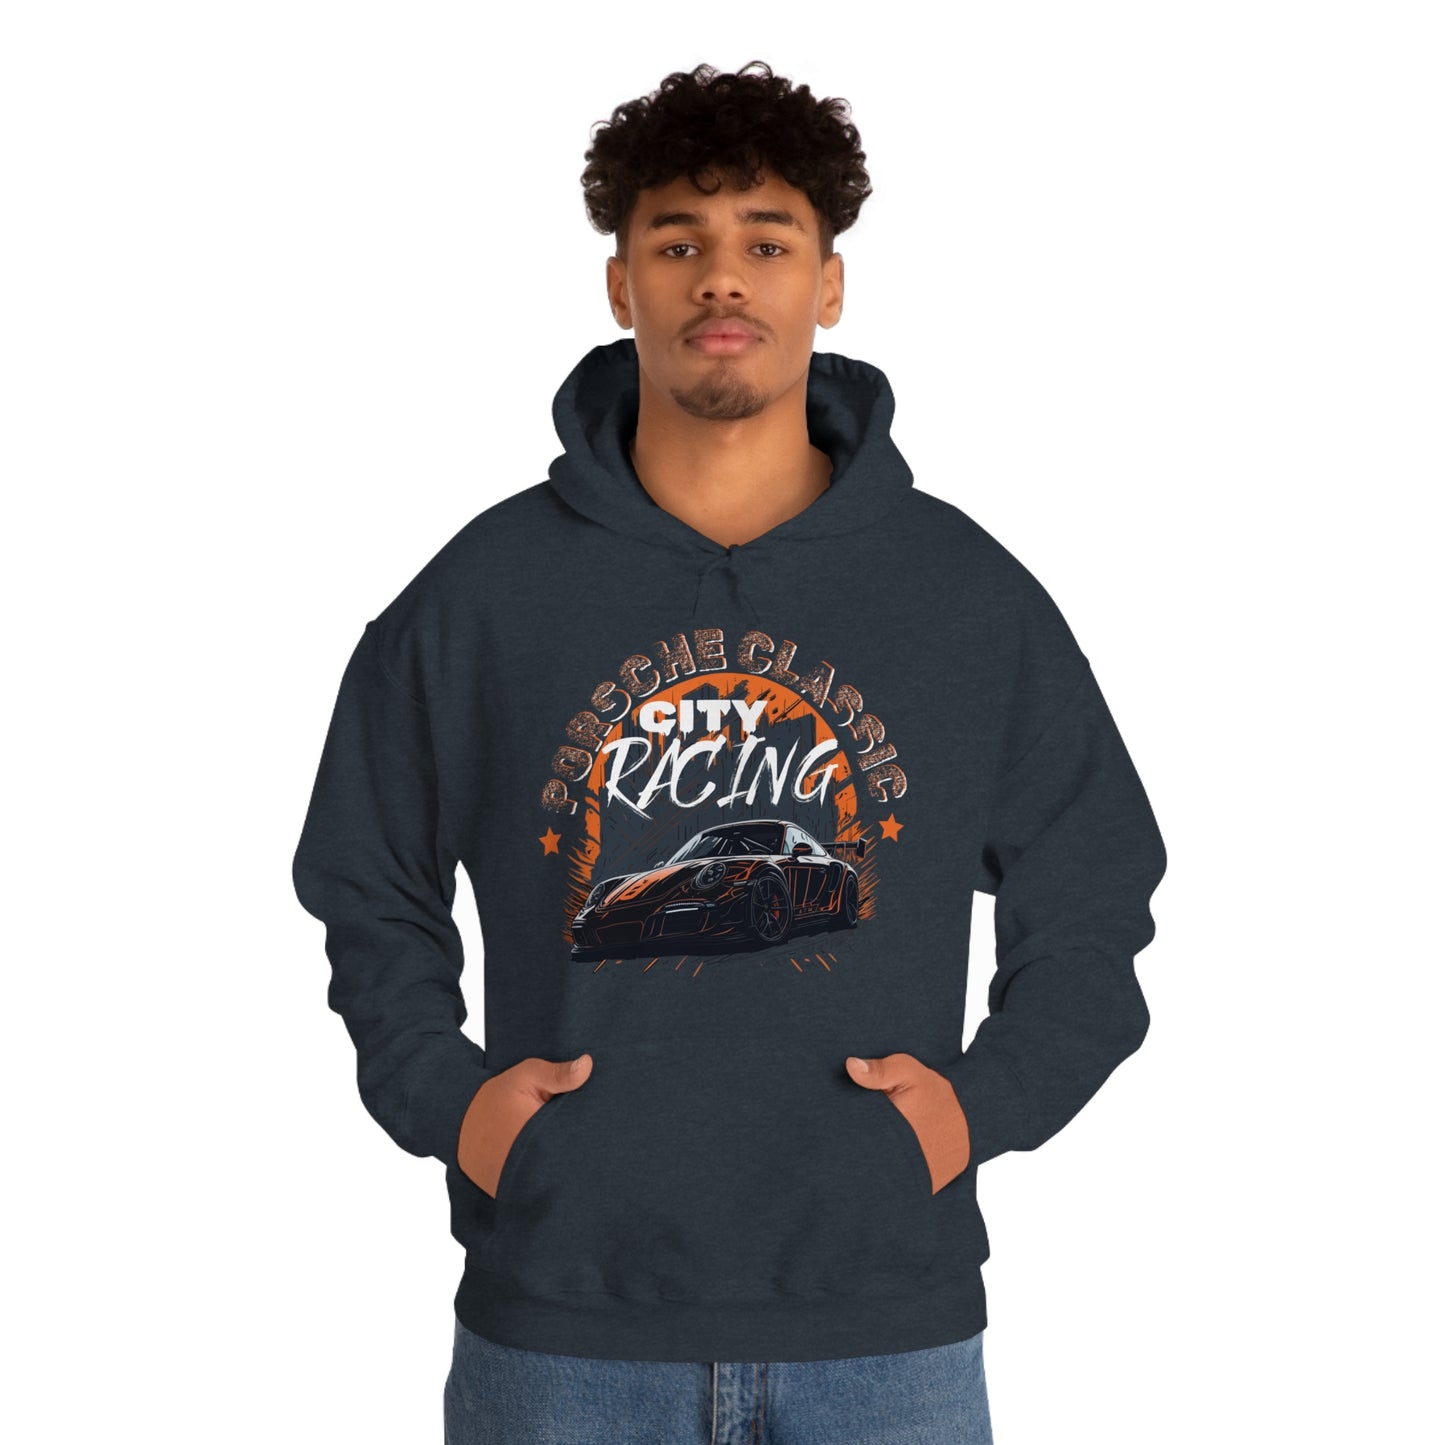 CITY RACING Unisex Heavy Blend™ Hooded Sweatshirt